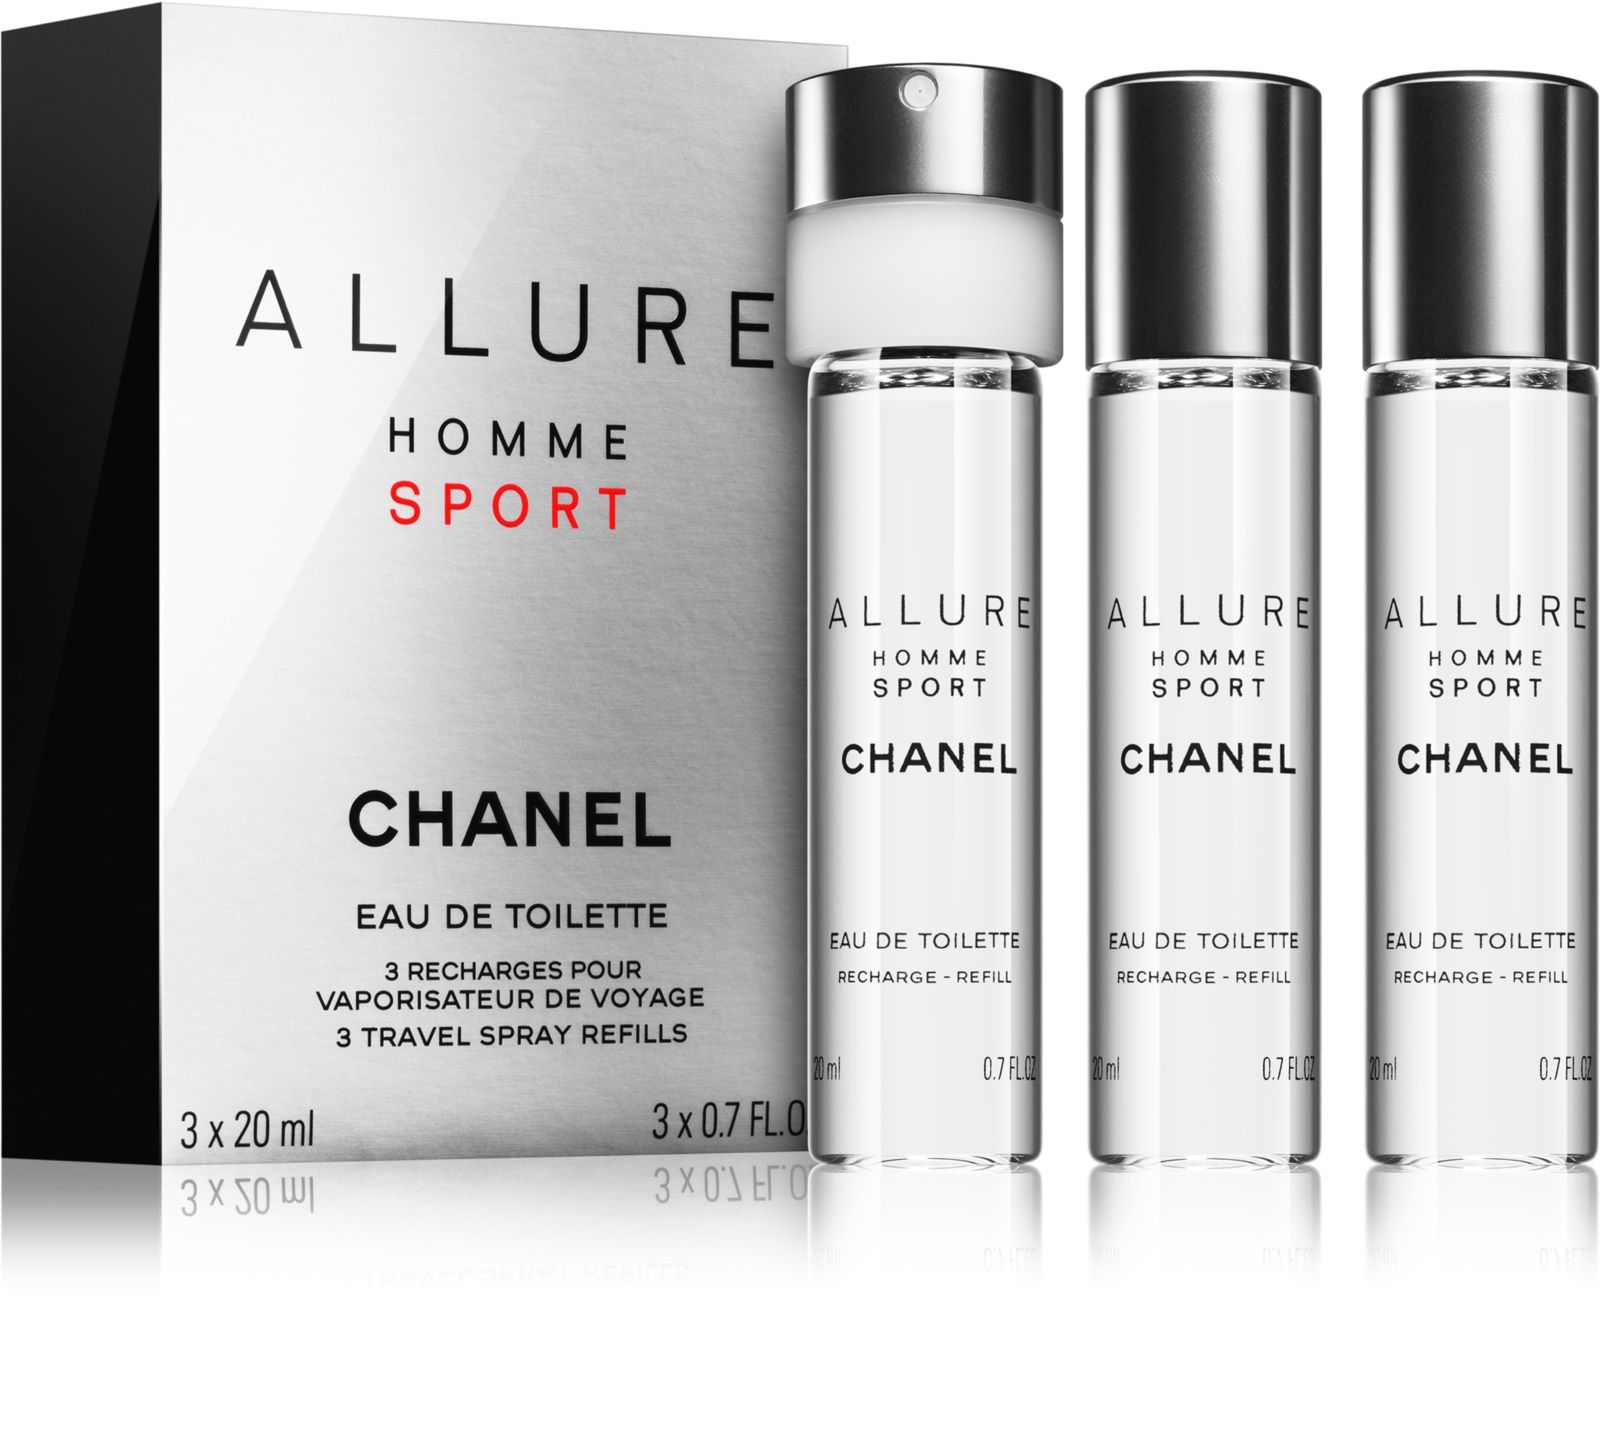 Allure homme sport мужской. Шанель Allure homme Sport. Chanel Allure homme Sport. Chanel Allure Sport. Chanel Allure homme Sport мужские.